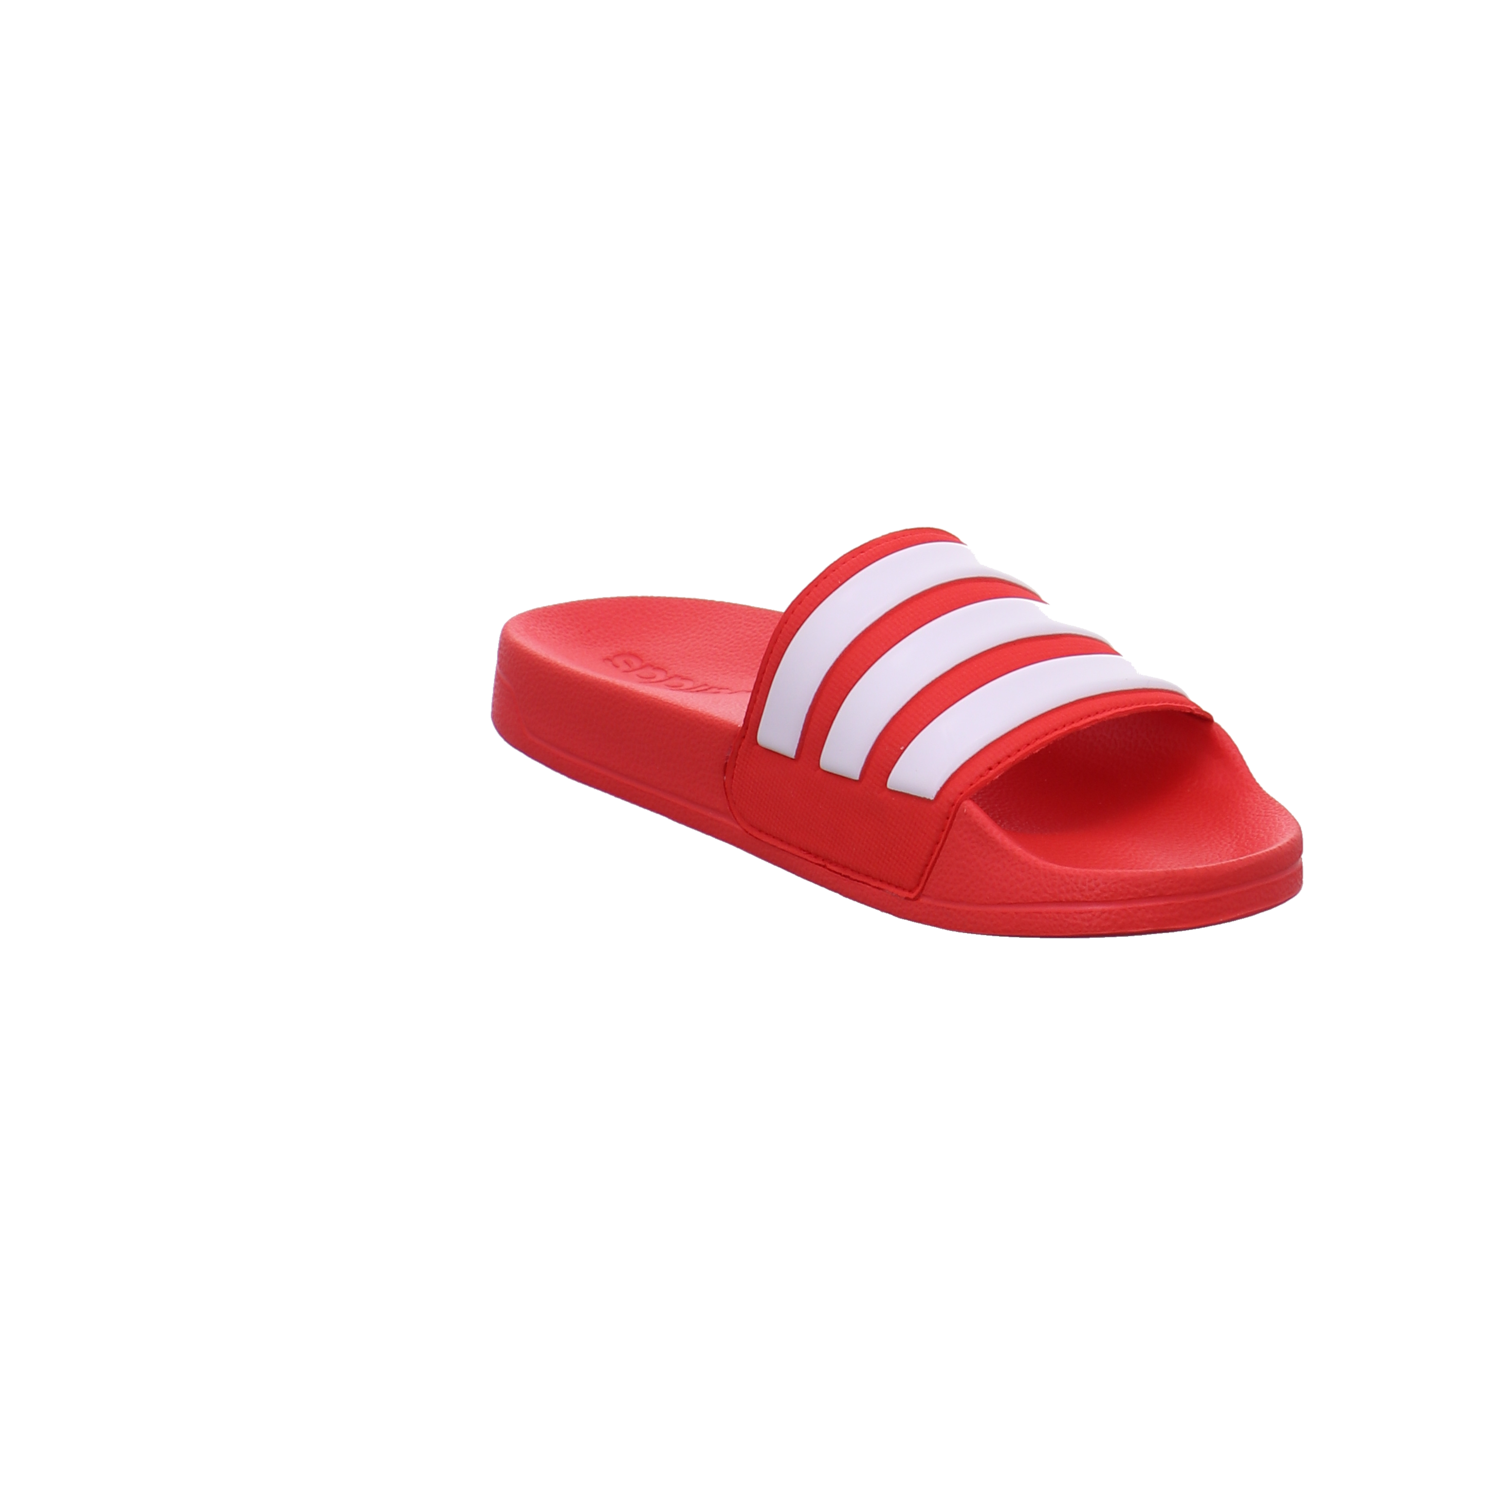 Adidas Schuhe  rot Bild7